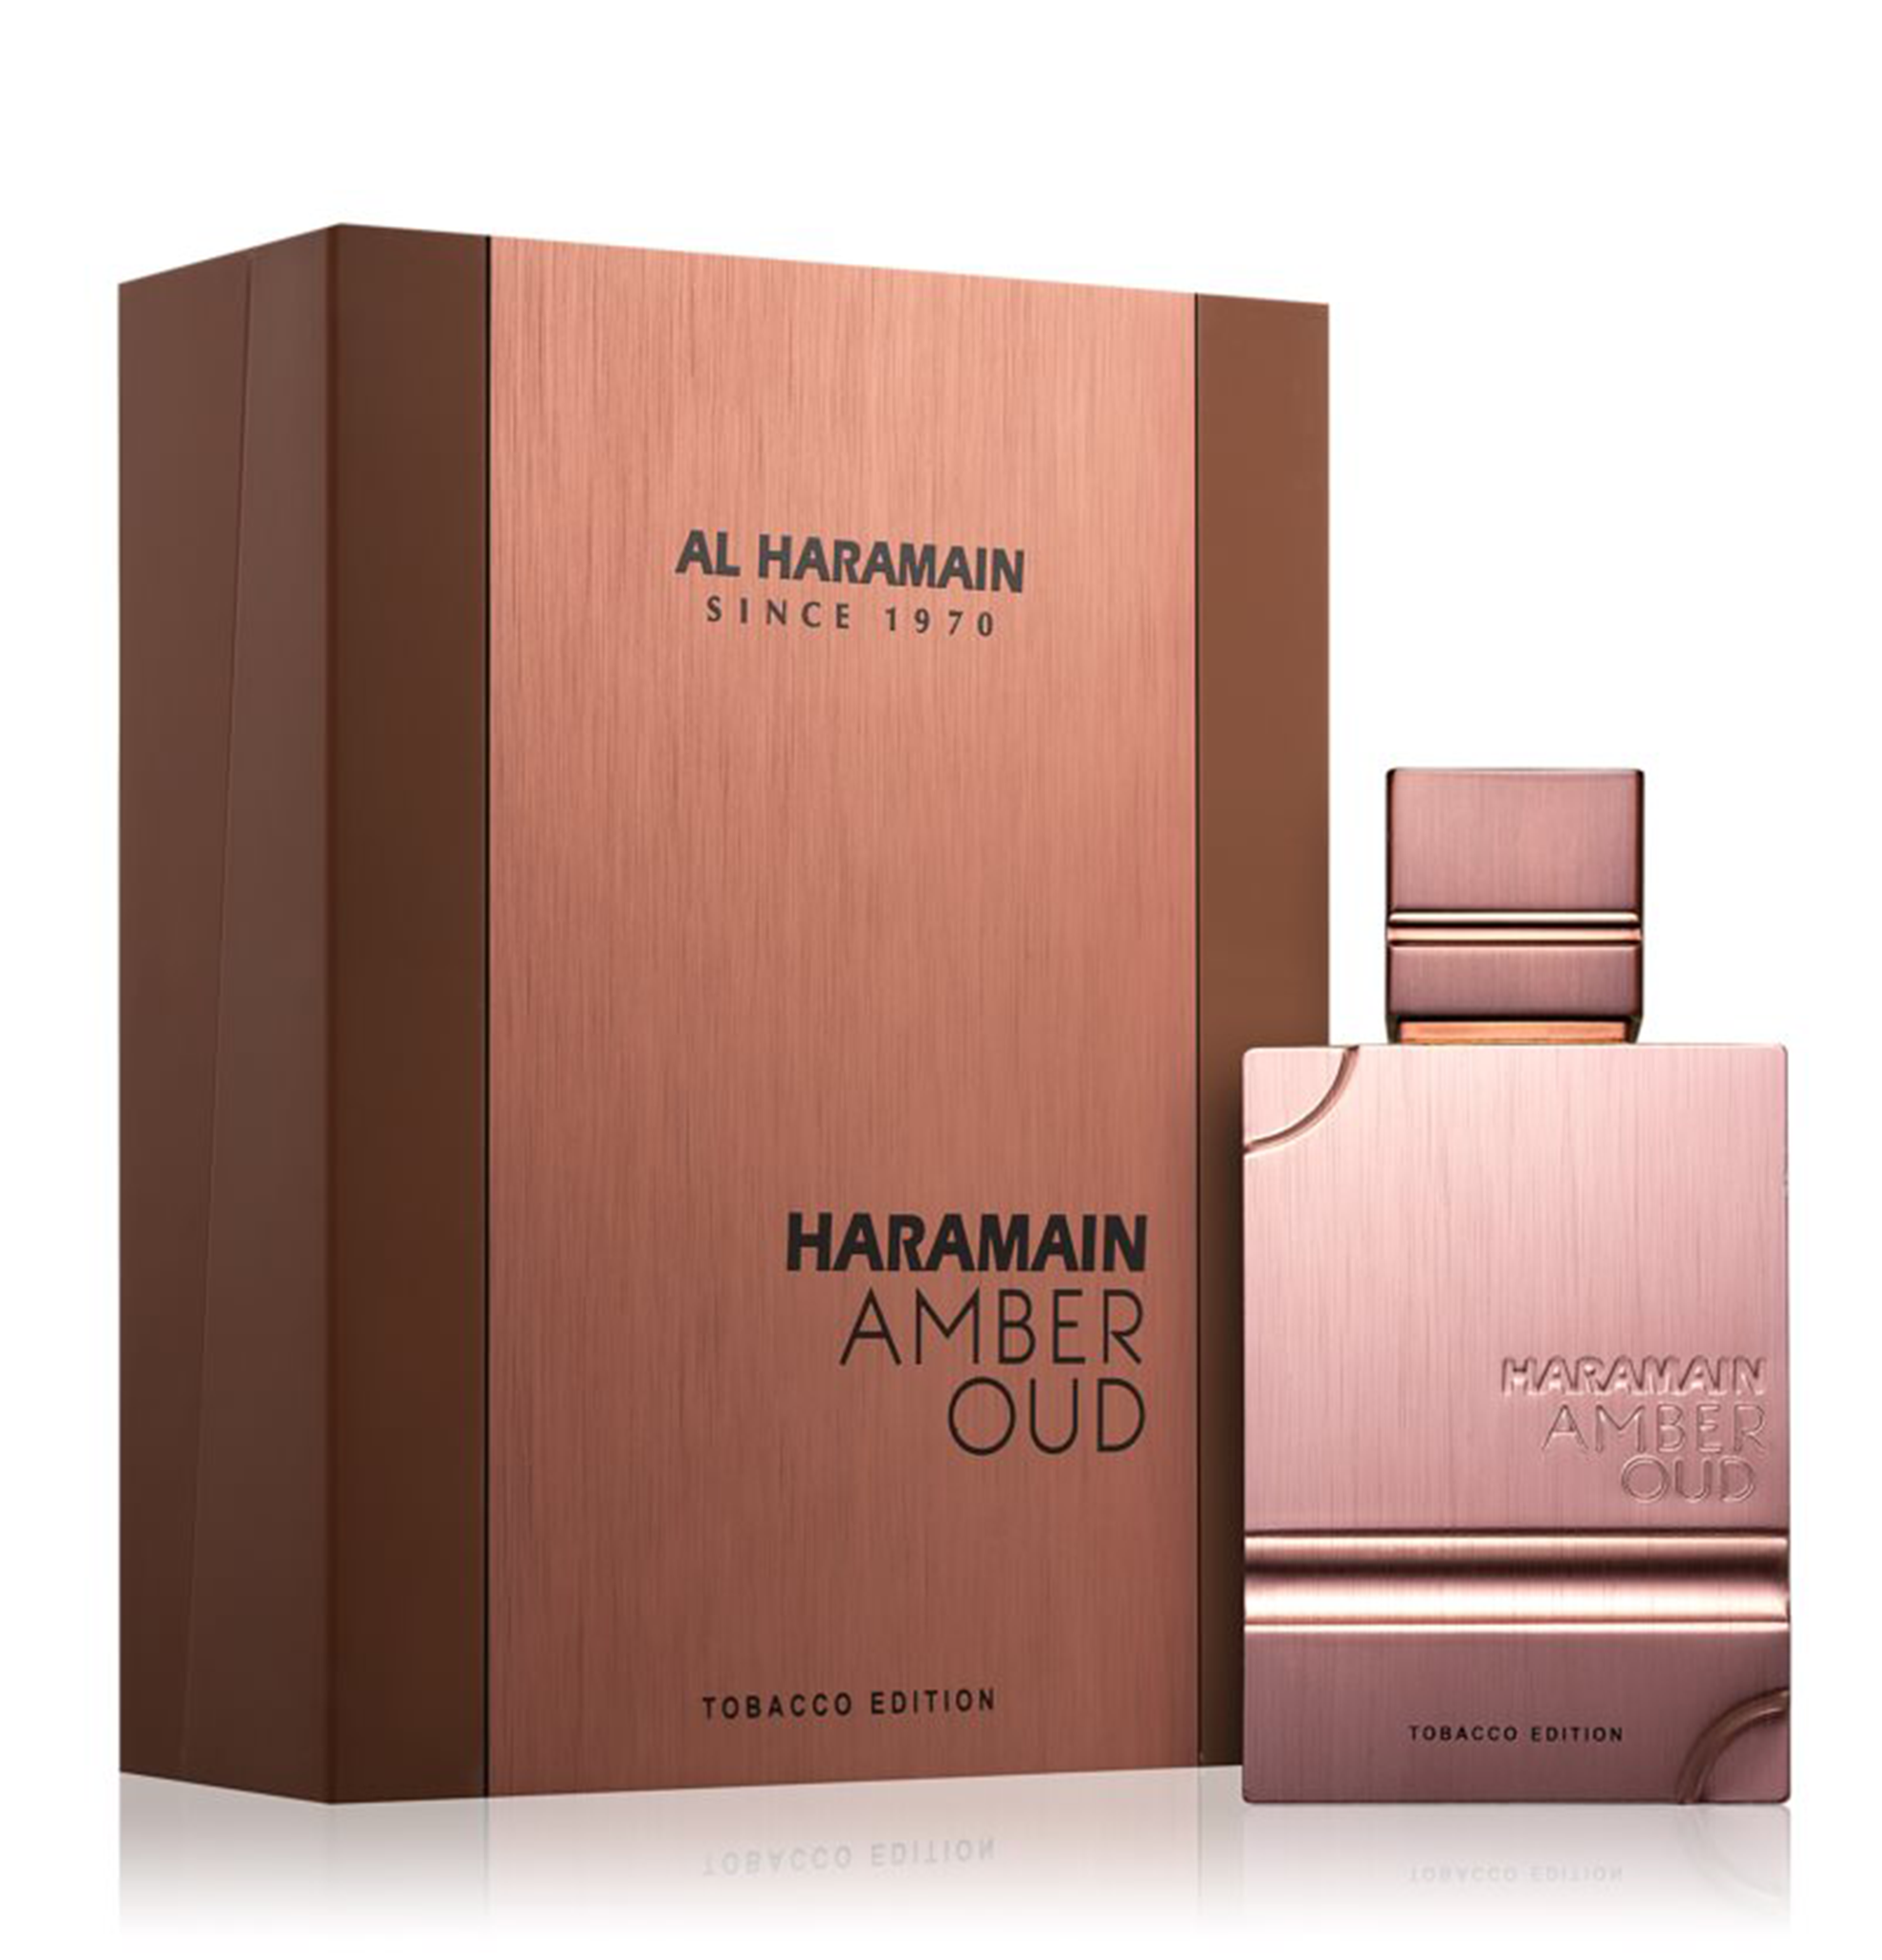 Al Haramain Amber Oud Bleu Edition by Al Haramain Eau de Parfum Spray 2.03 oz and A Mystery Name Brand Sample vile